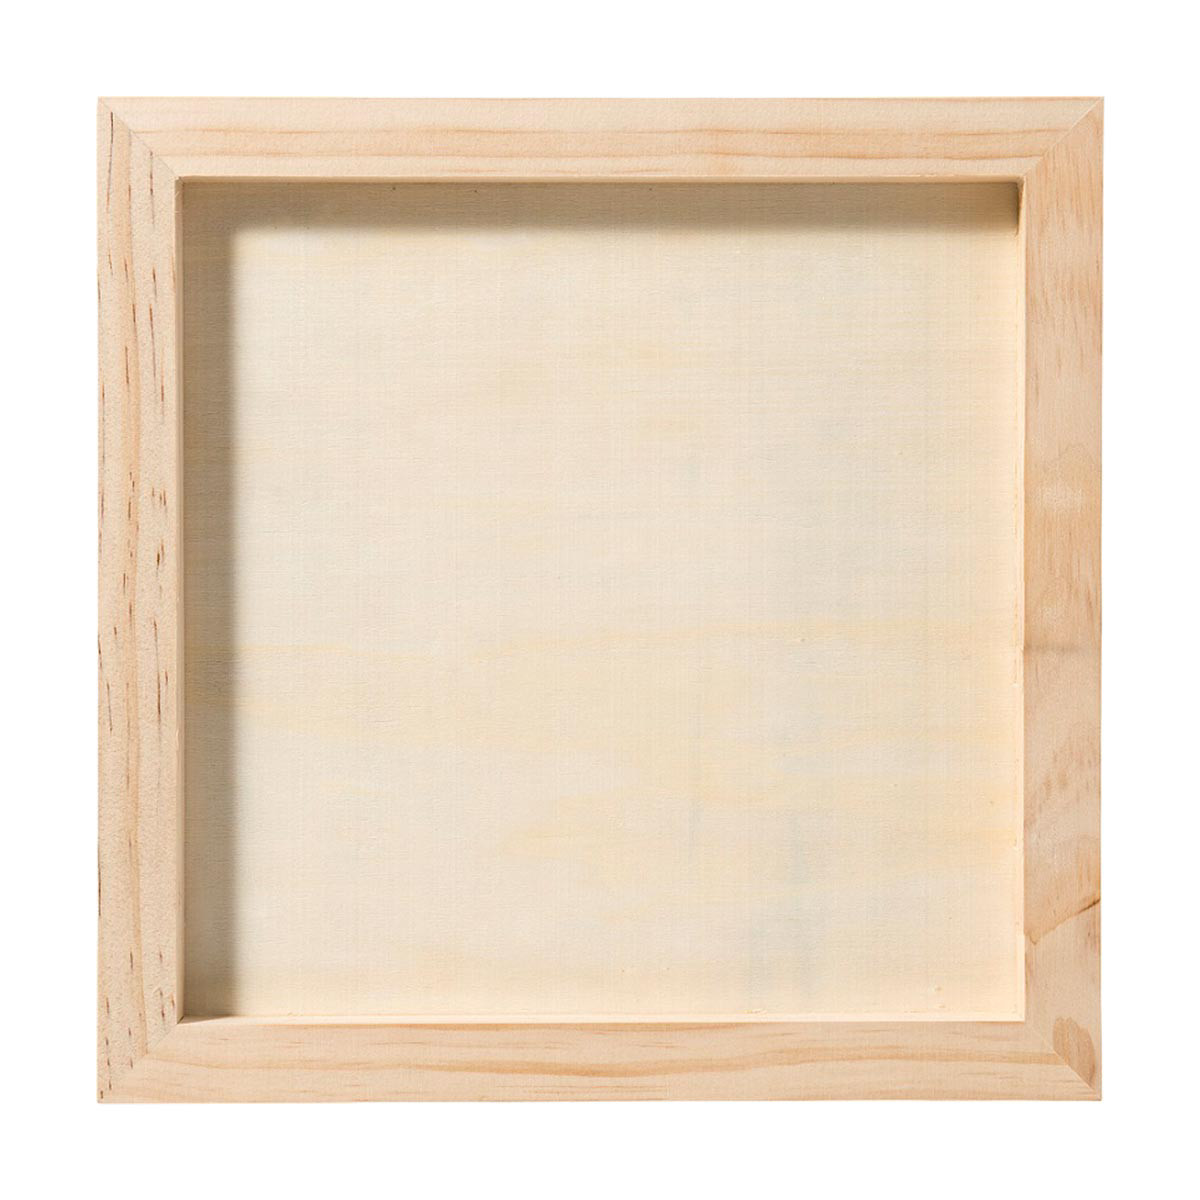 Plaid Unpainted Wood Canvas Panel, 10" x 10"